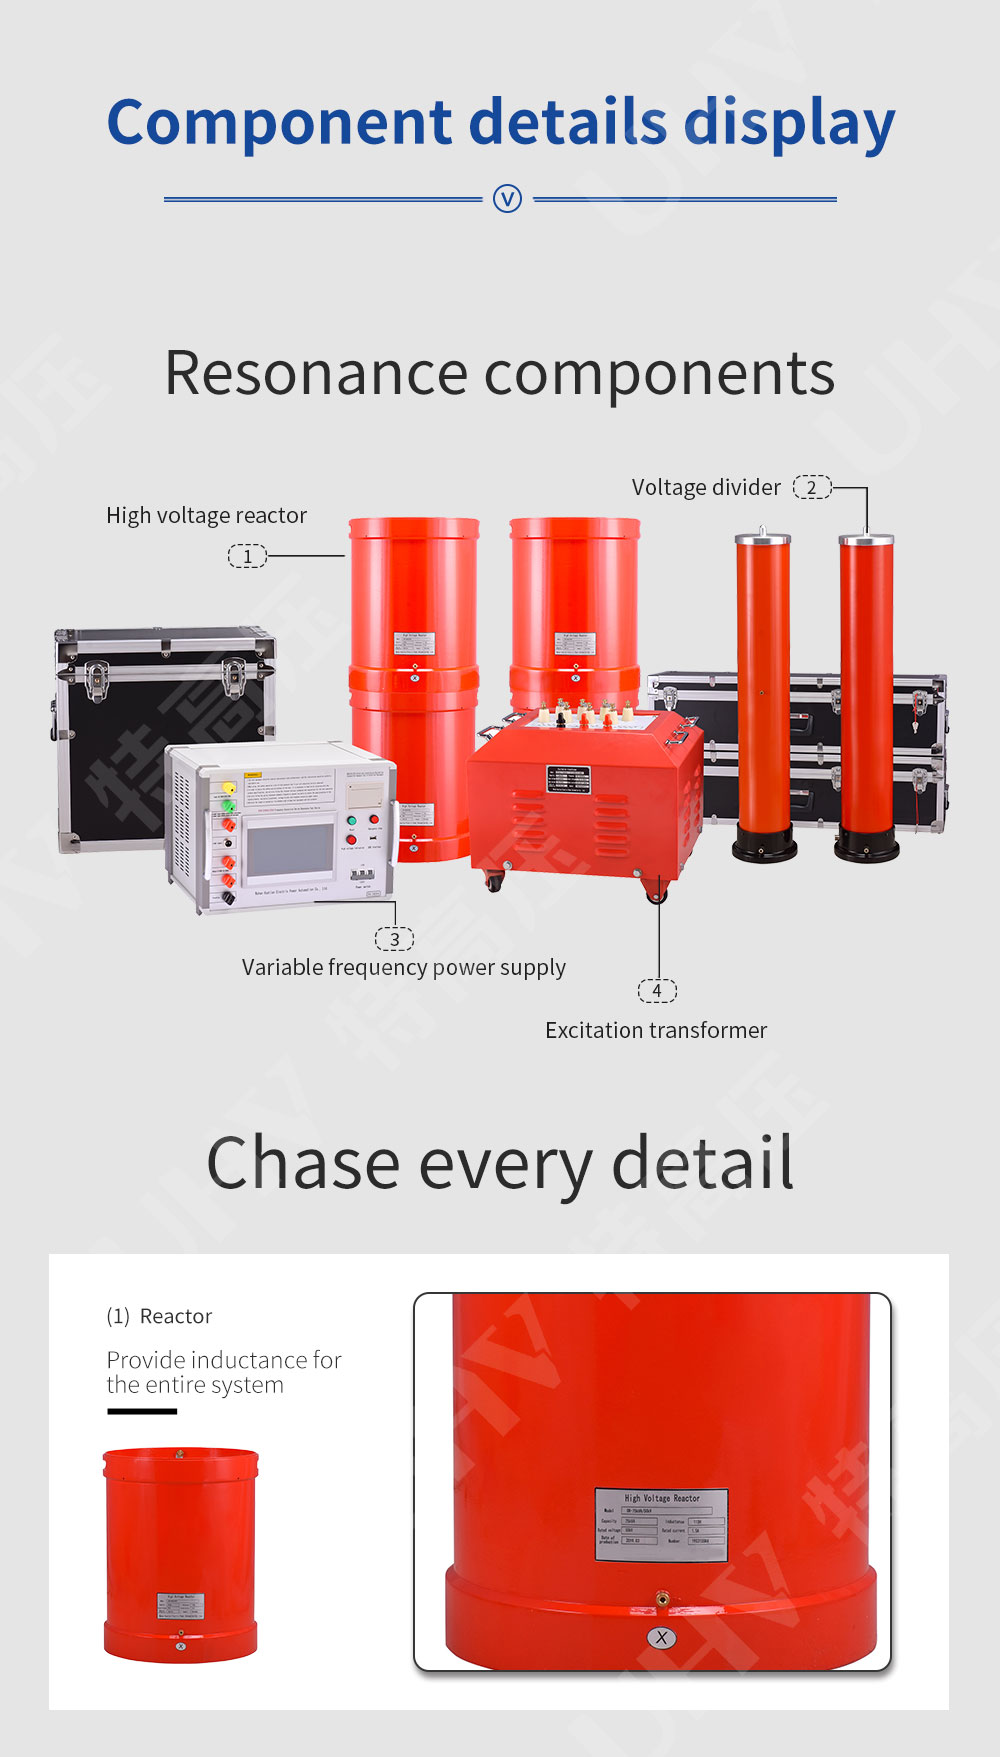 Series resonance withstand voltage equipment